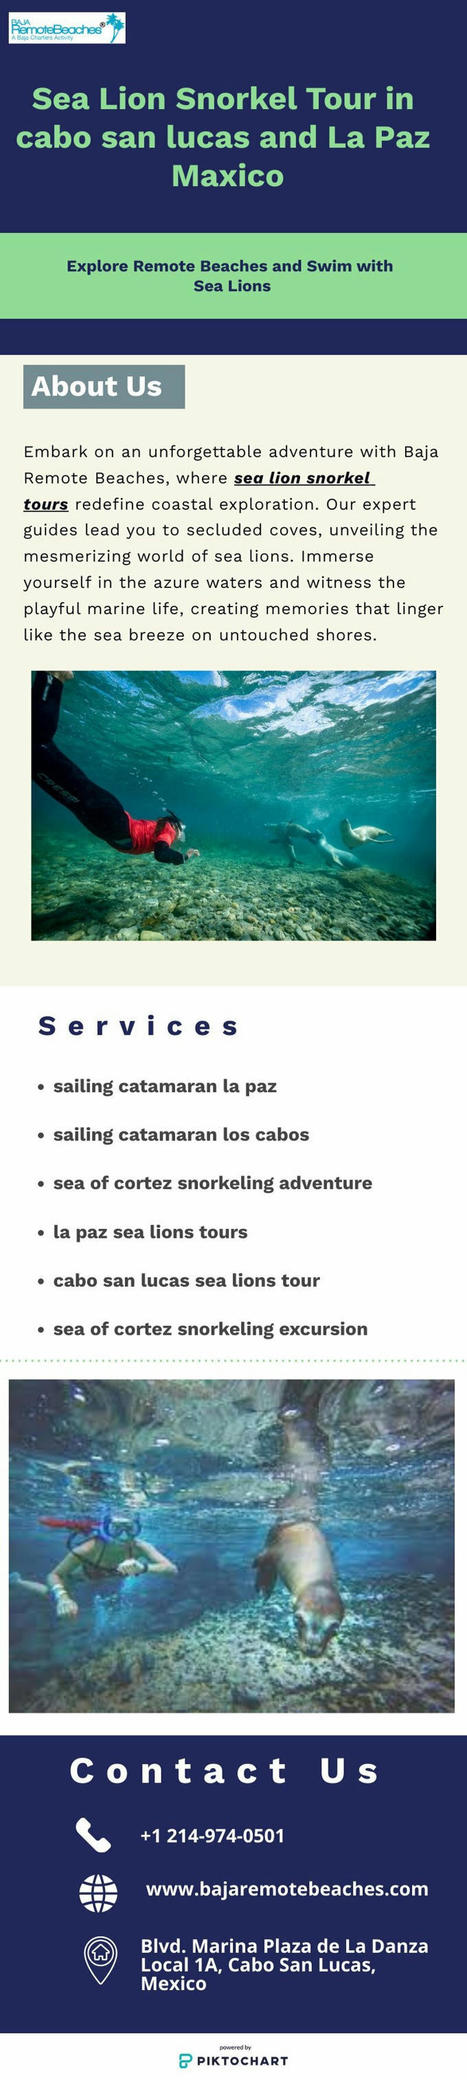 Embark on an Unforgettable Sea Lion Snorkel Tour Adventure | Baja Remote Beaches | sailing catamaran charter | Scoop.it